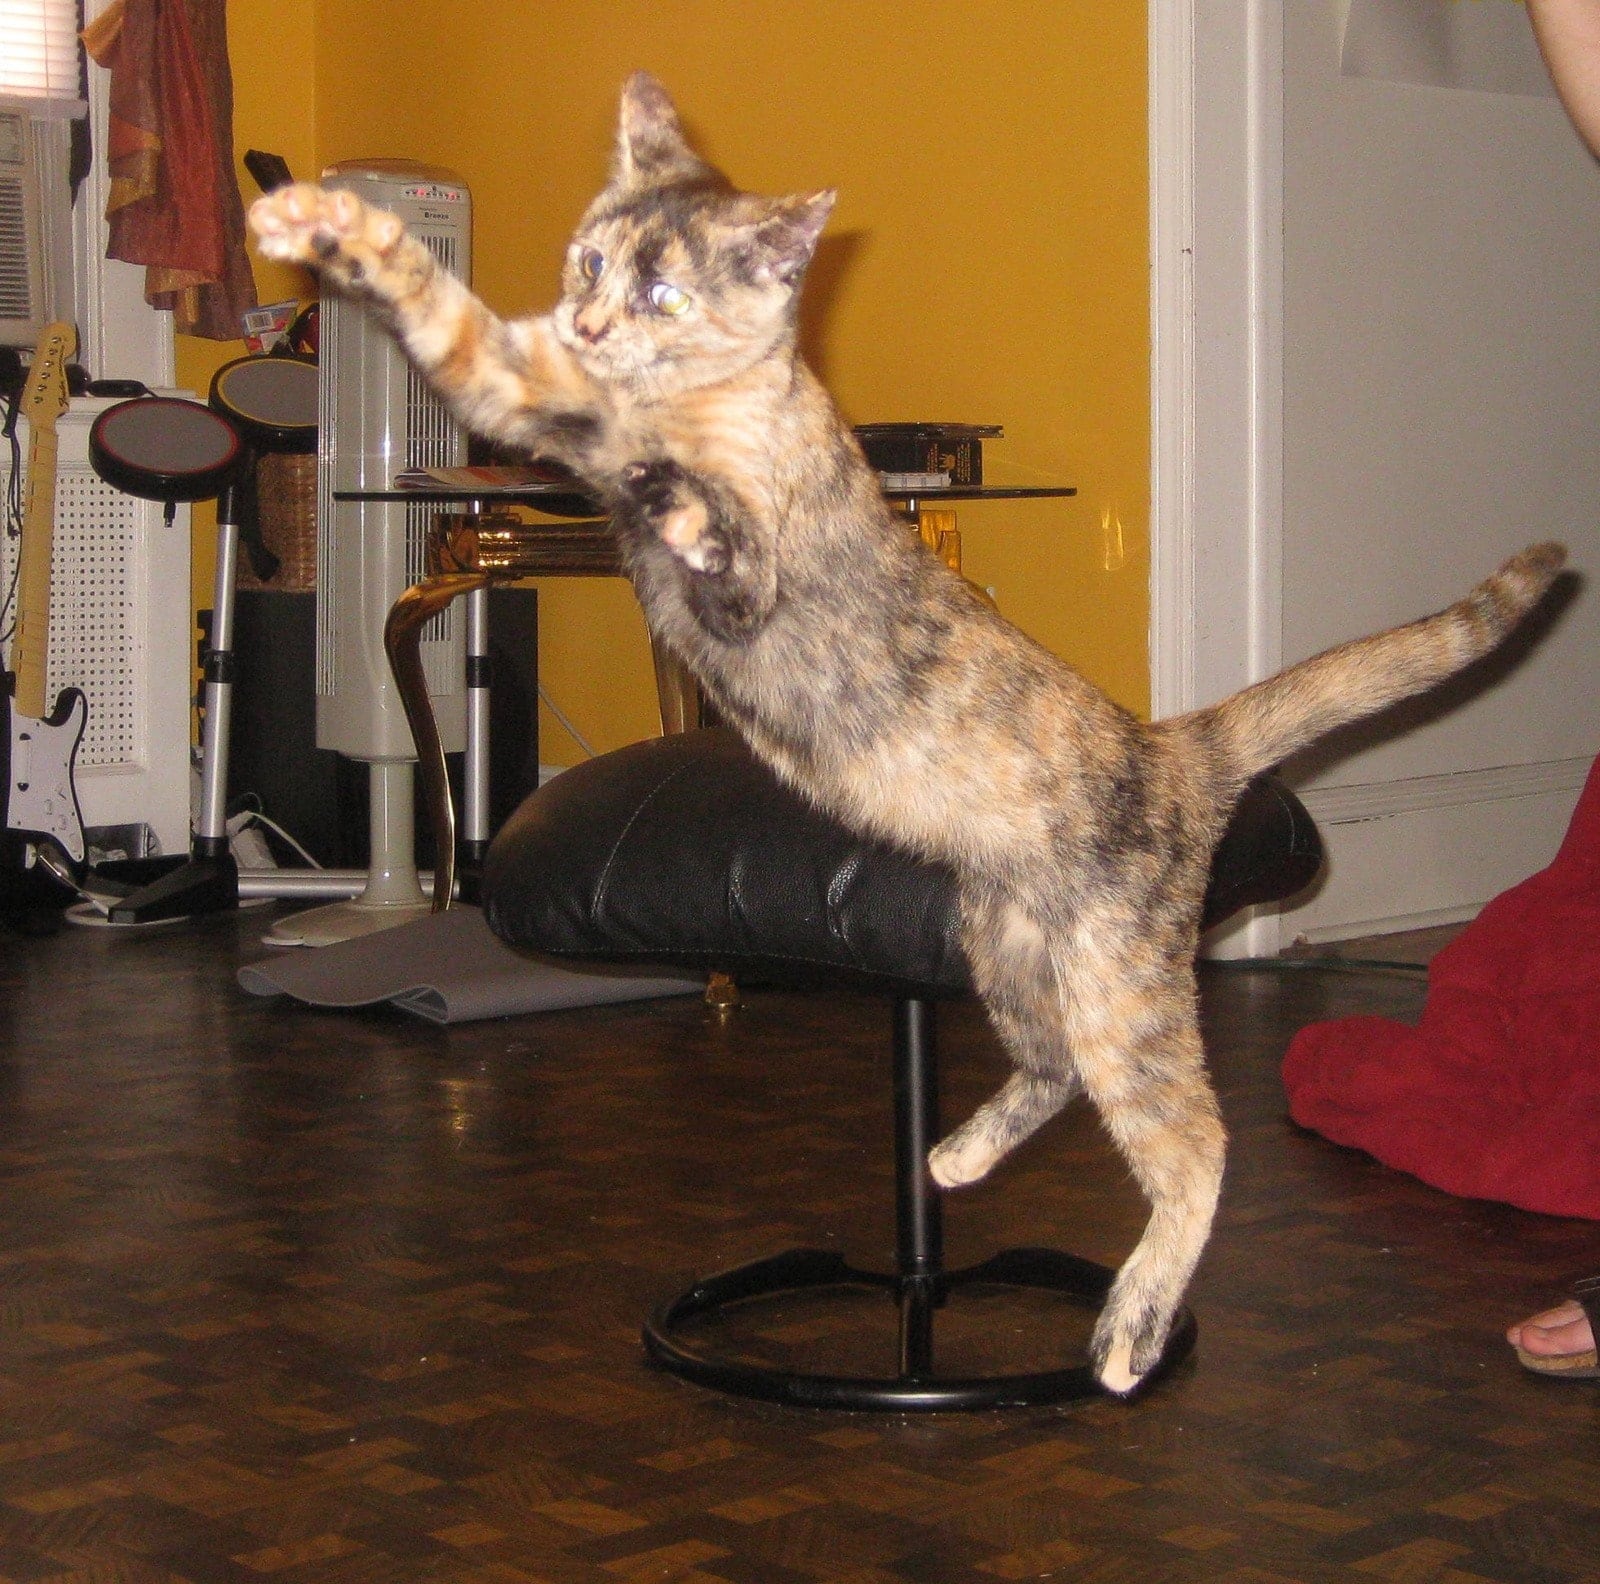 Leela as a kitten jumping in the air